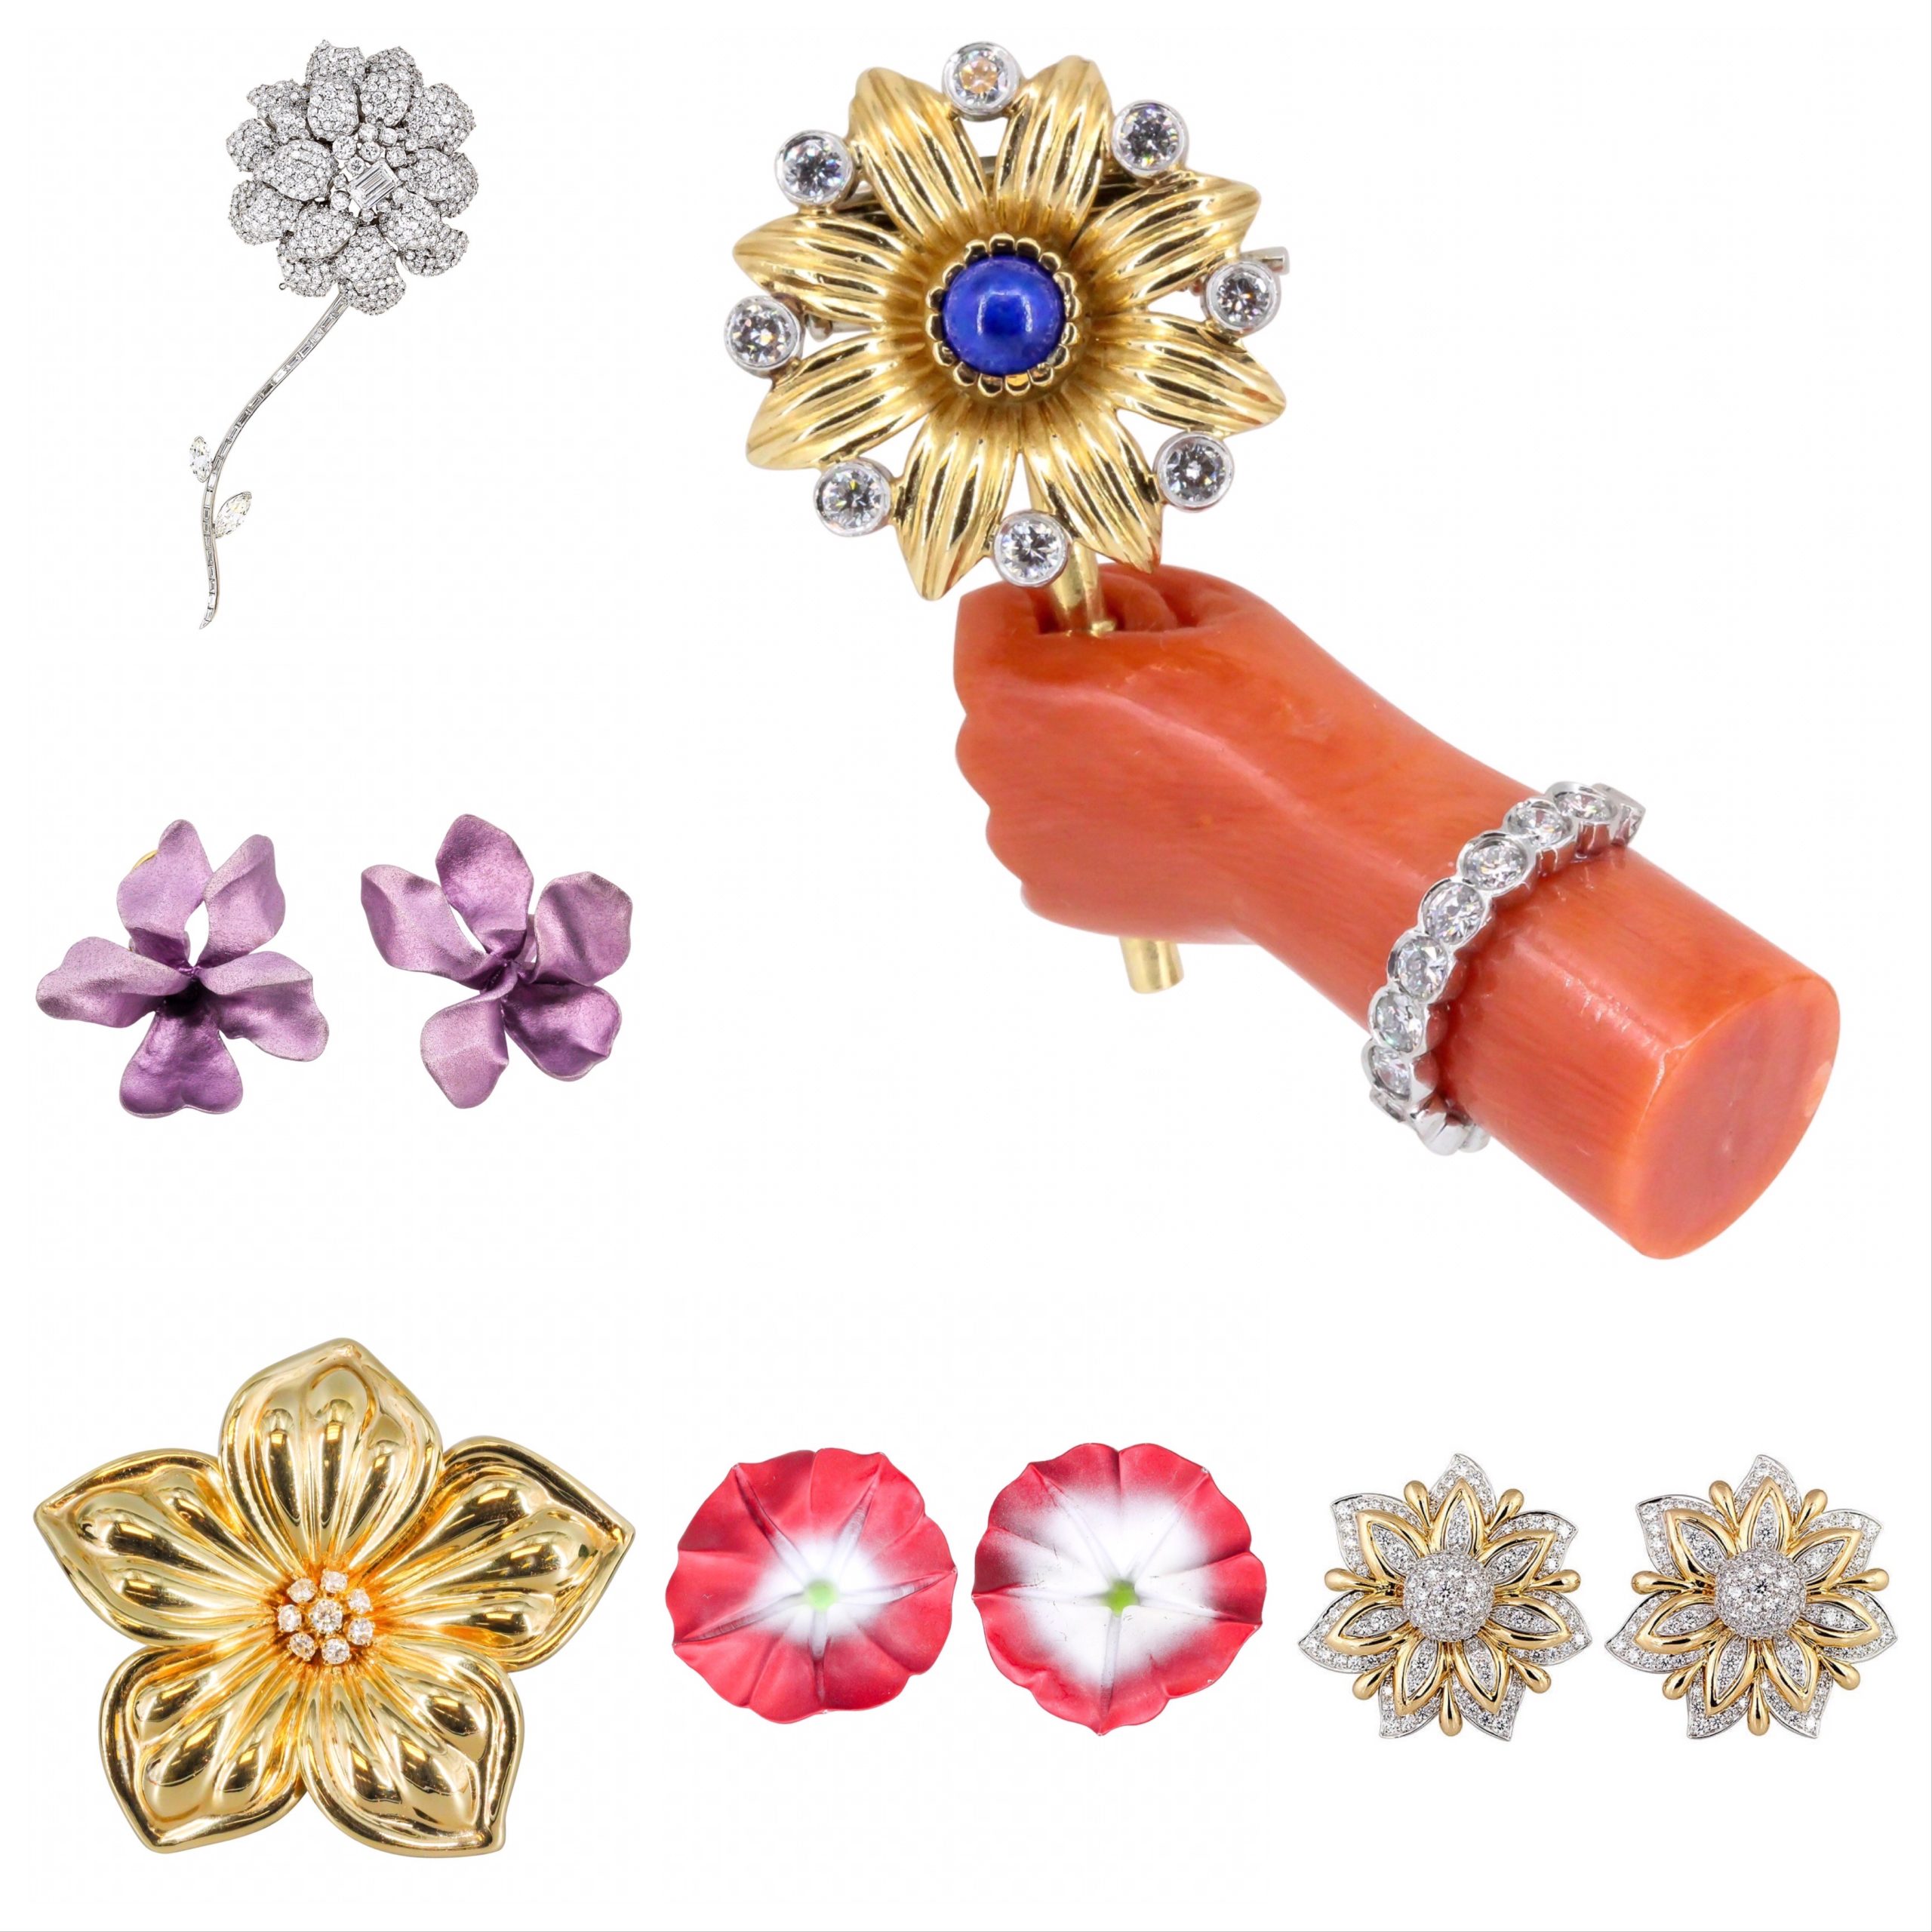 Flower Jewelry in Gold, Aluminum, Diamond